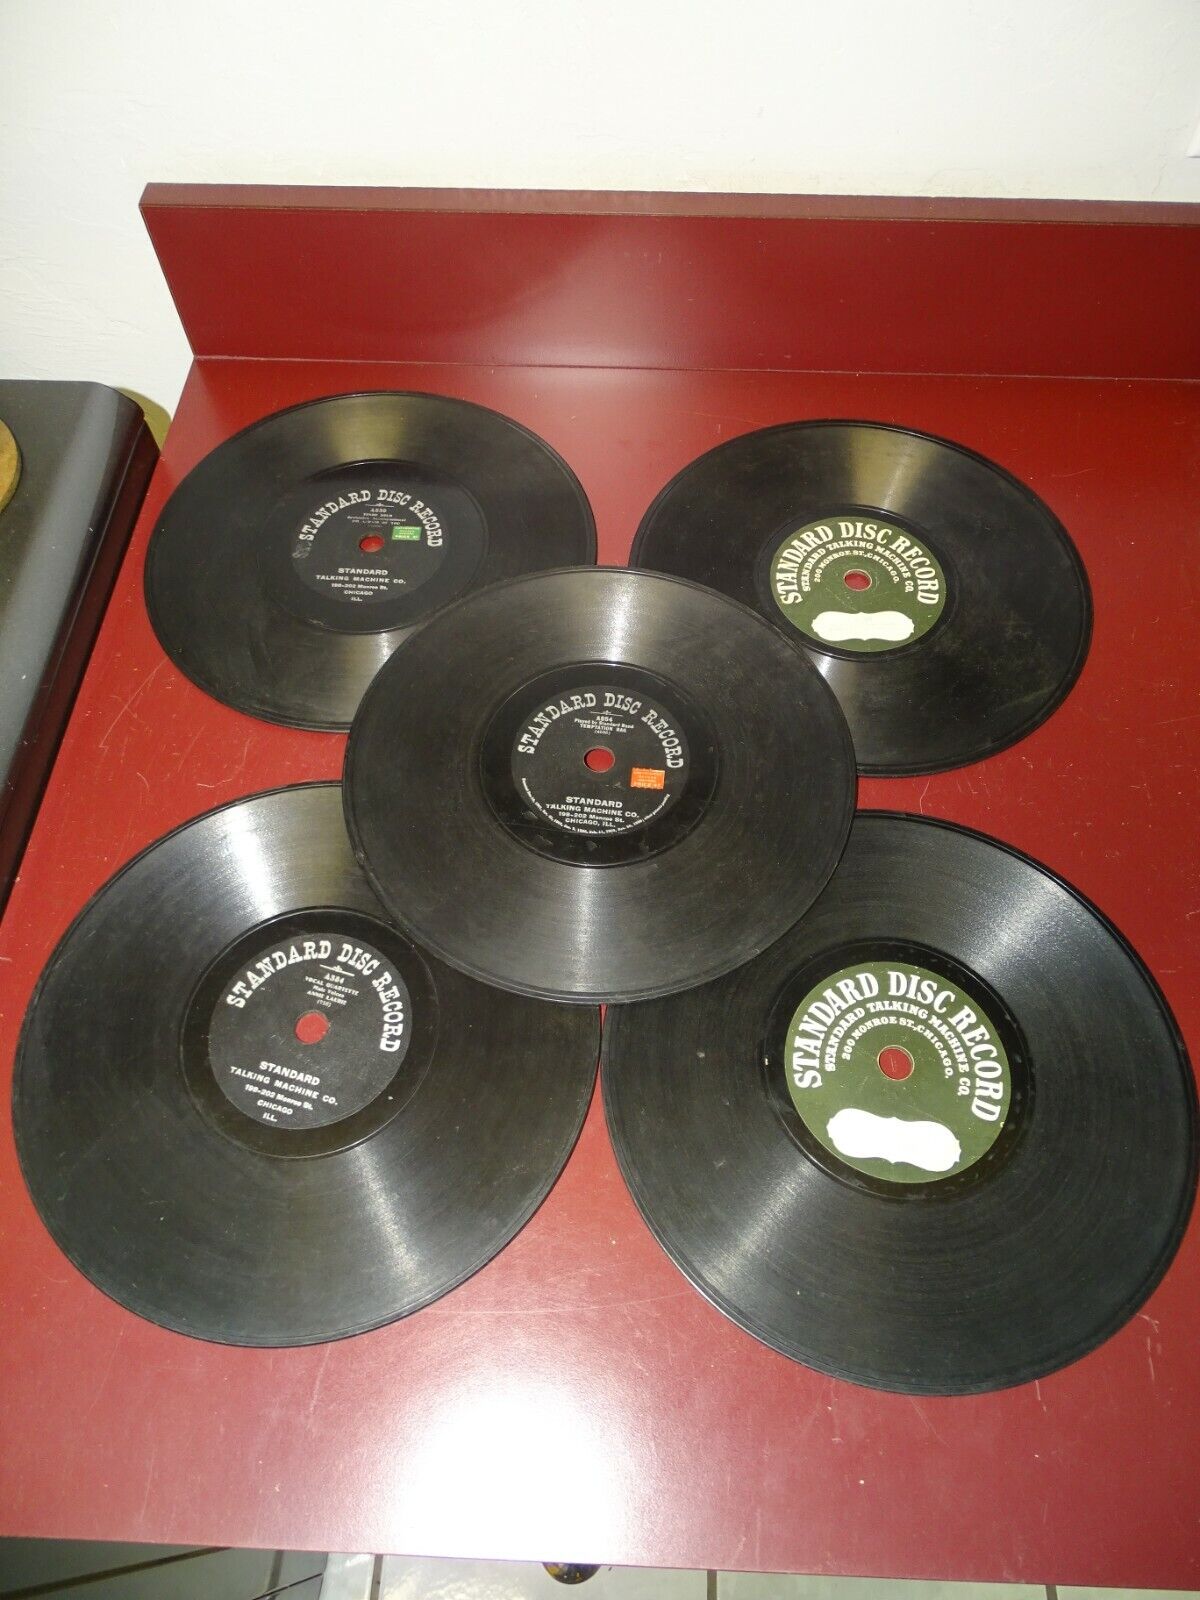 5 Vintage Standard Disc Records 10", 78 RPM, Large Center Hole Standard Disc Records